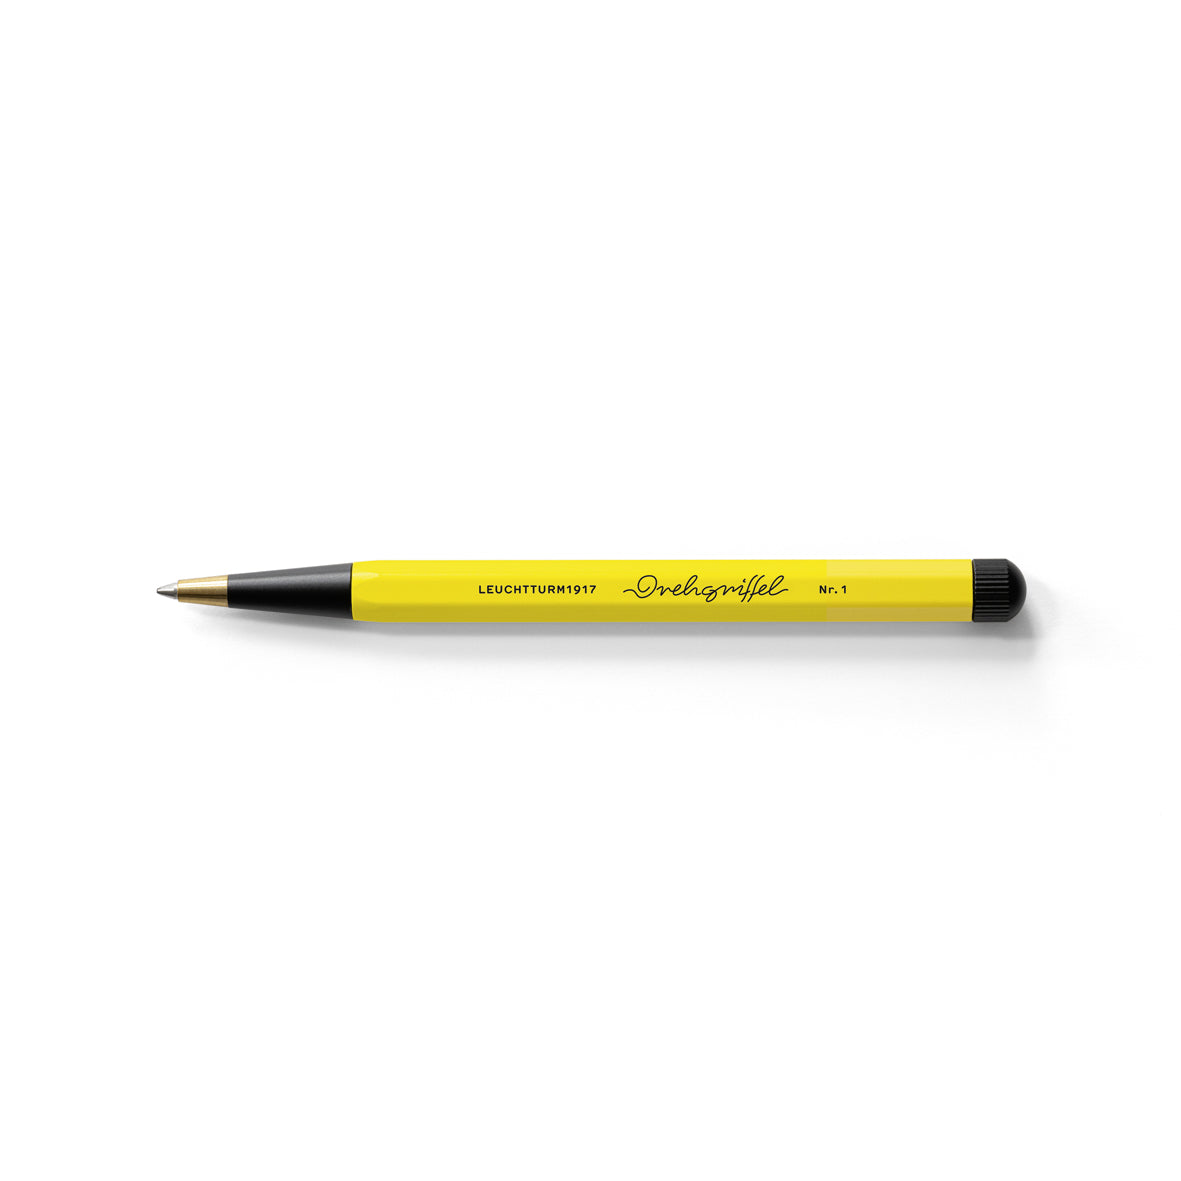 OCTÀGON DESIGN, Drehgriffel Pen , yellow and black color, white typography.